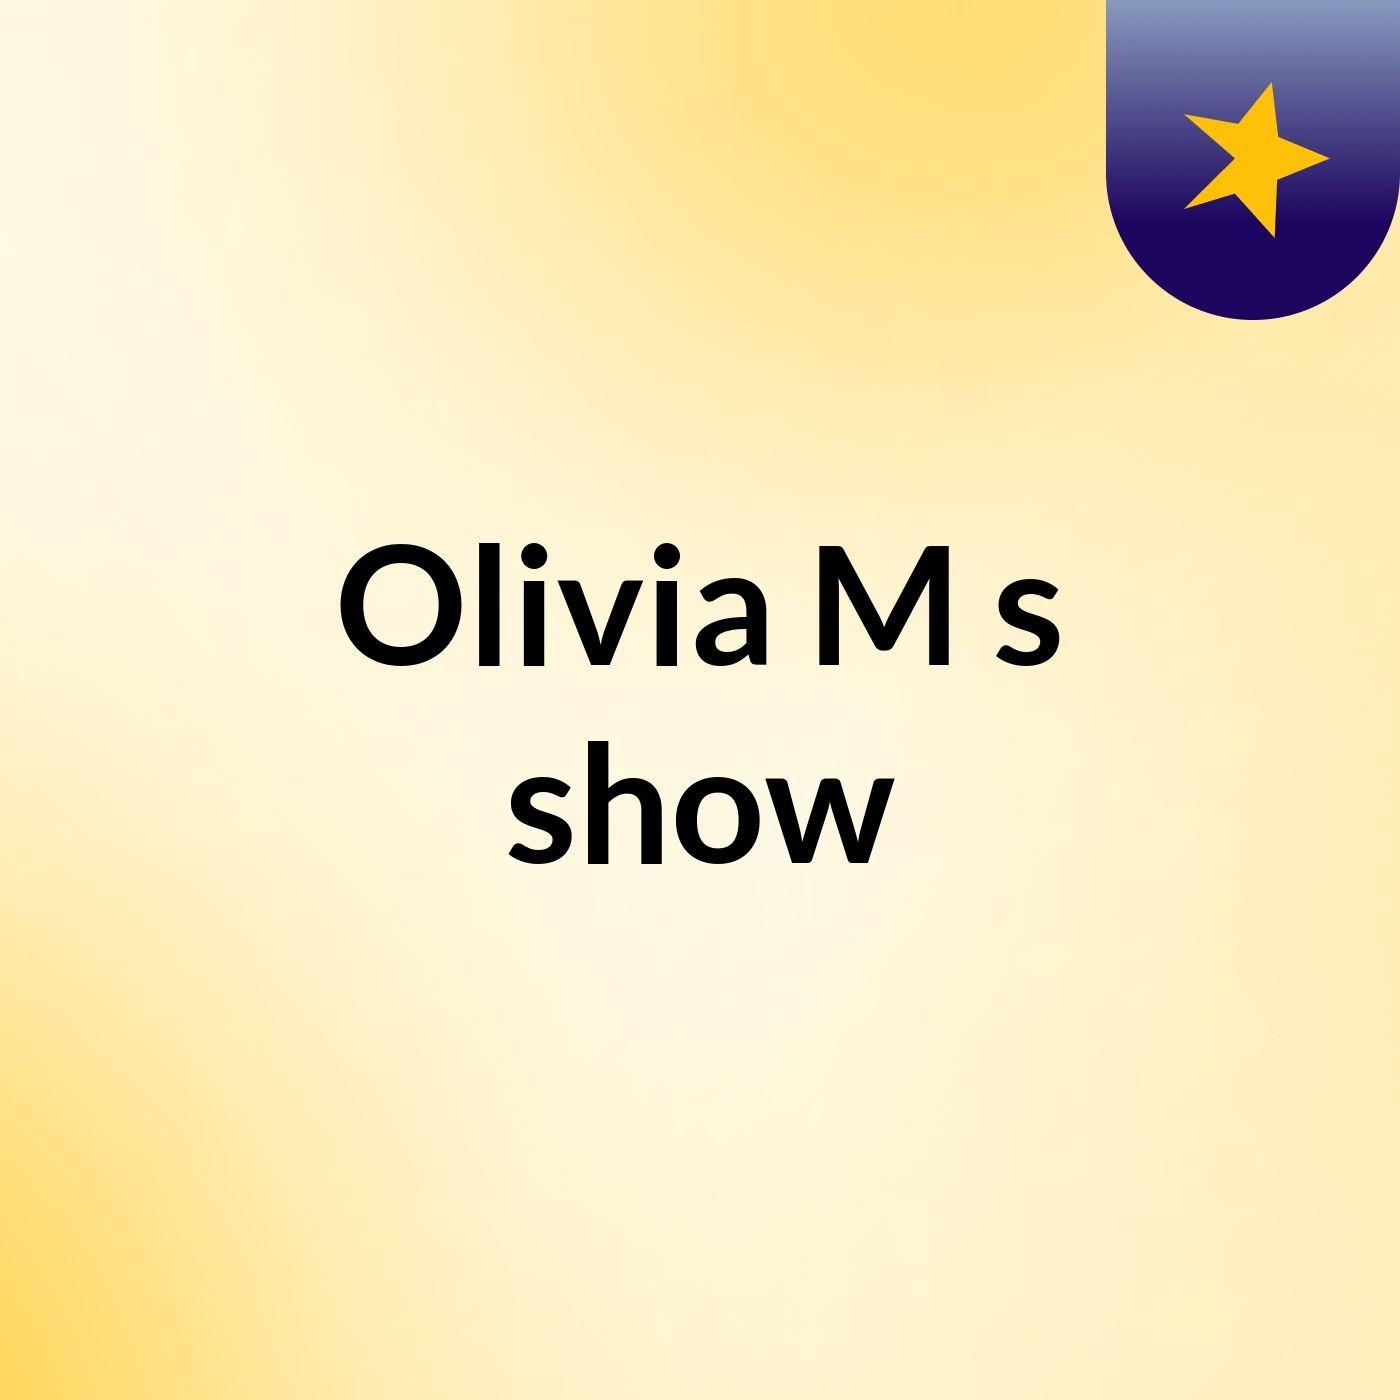 Olivia M's show